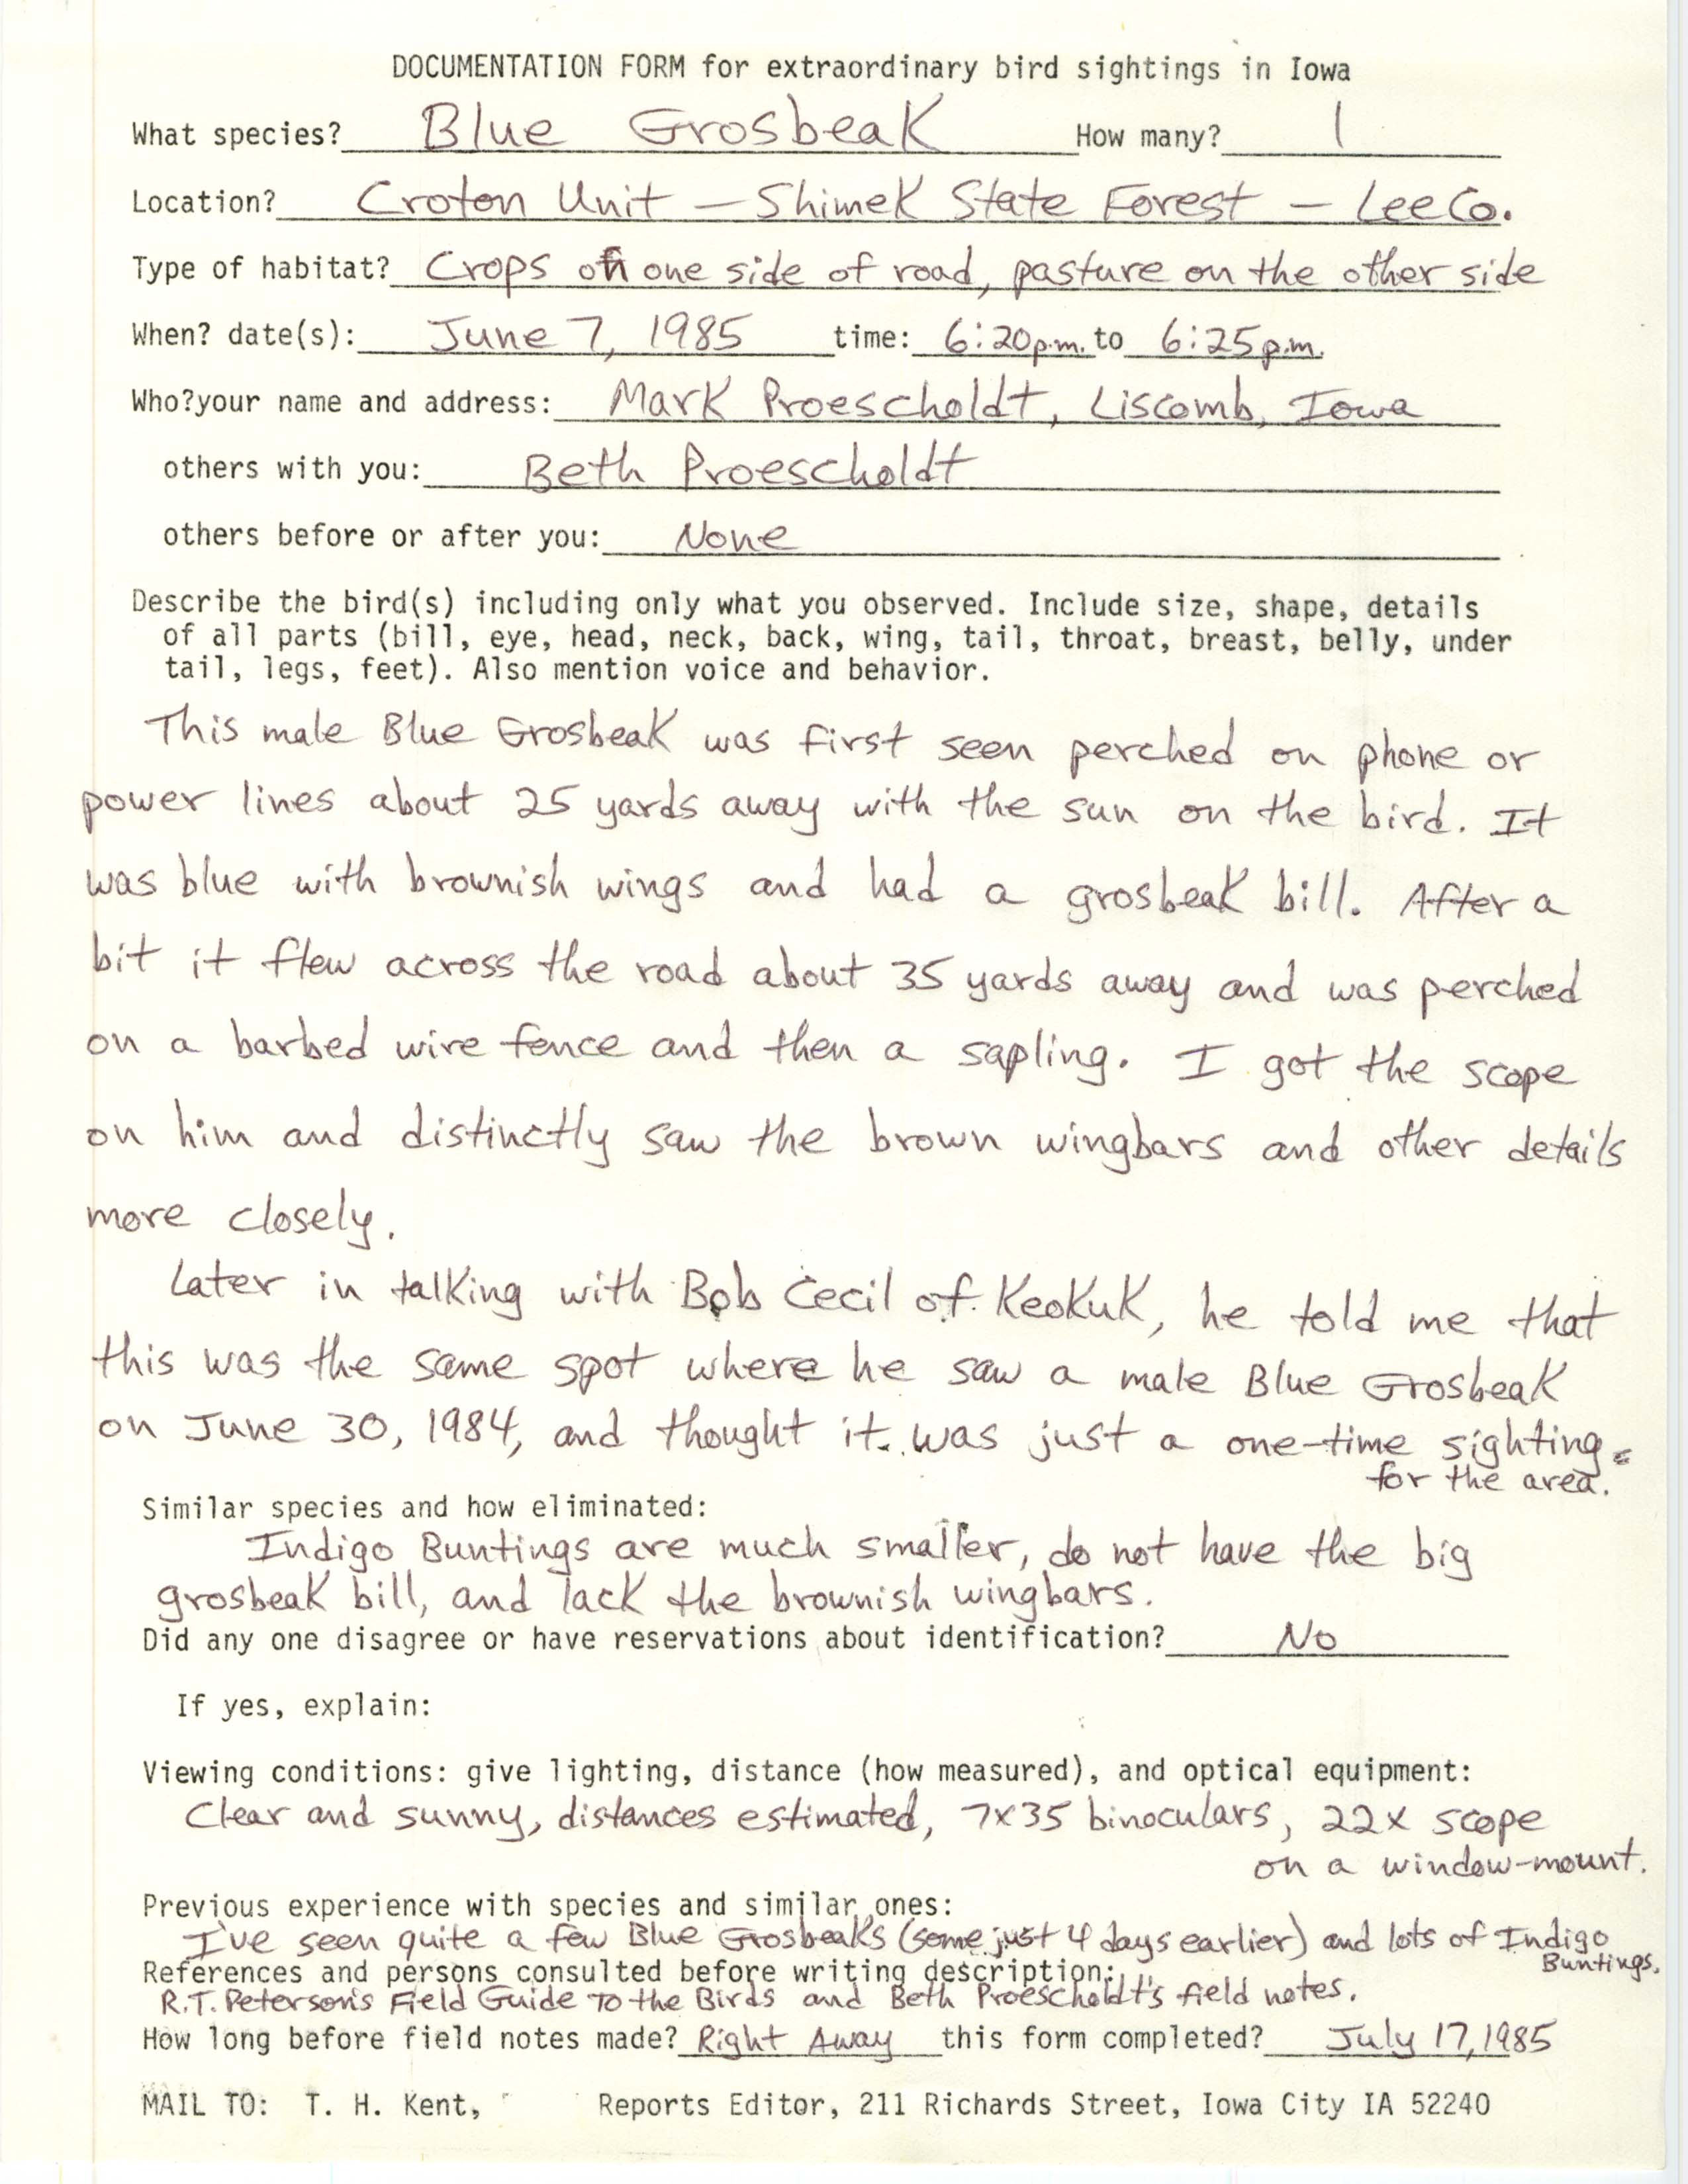 Rare bird documentation form for Blue Grosbeak at the Croton Unit of Shimek State Forest, 1985